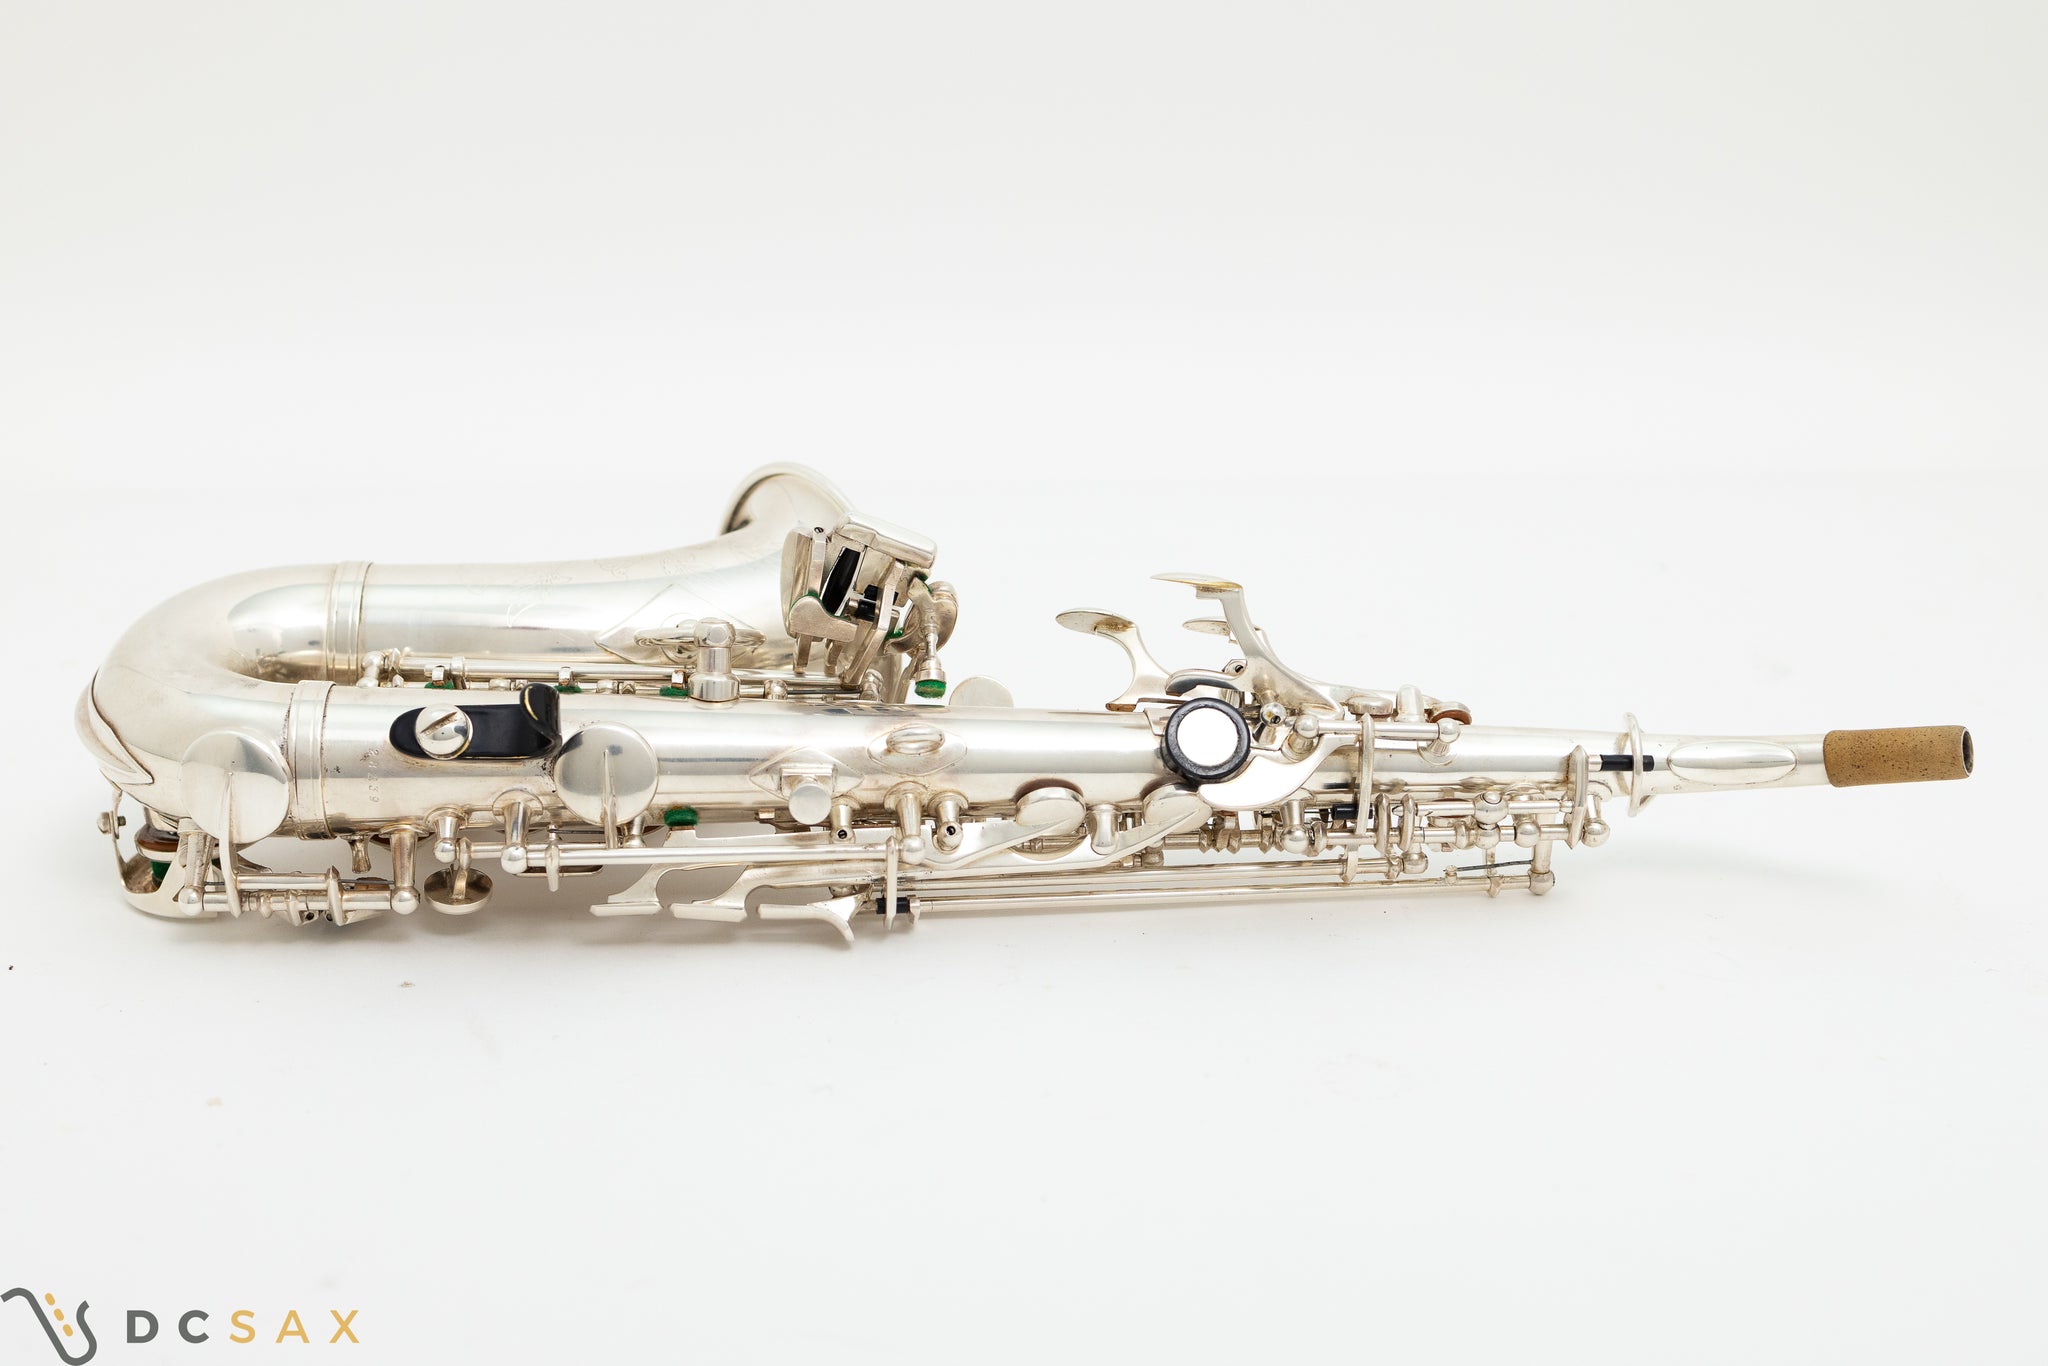 Rampone and Cazzani R1 Jazz Soprano Saxophone, Silver, Just Serviced